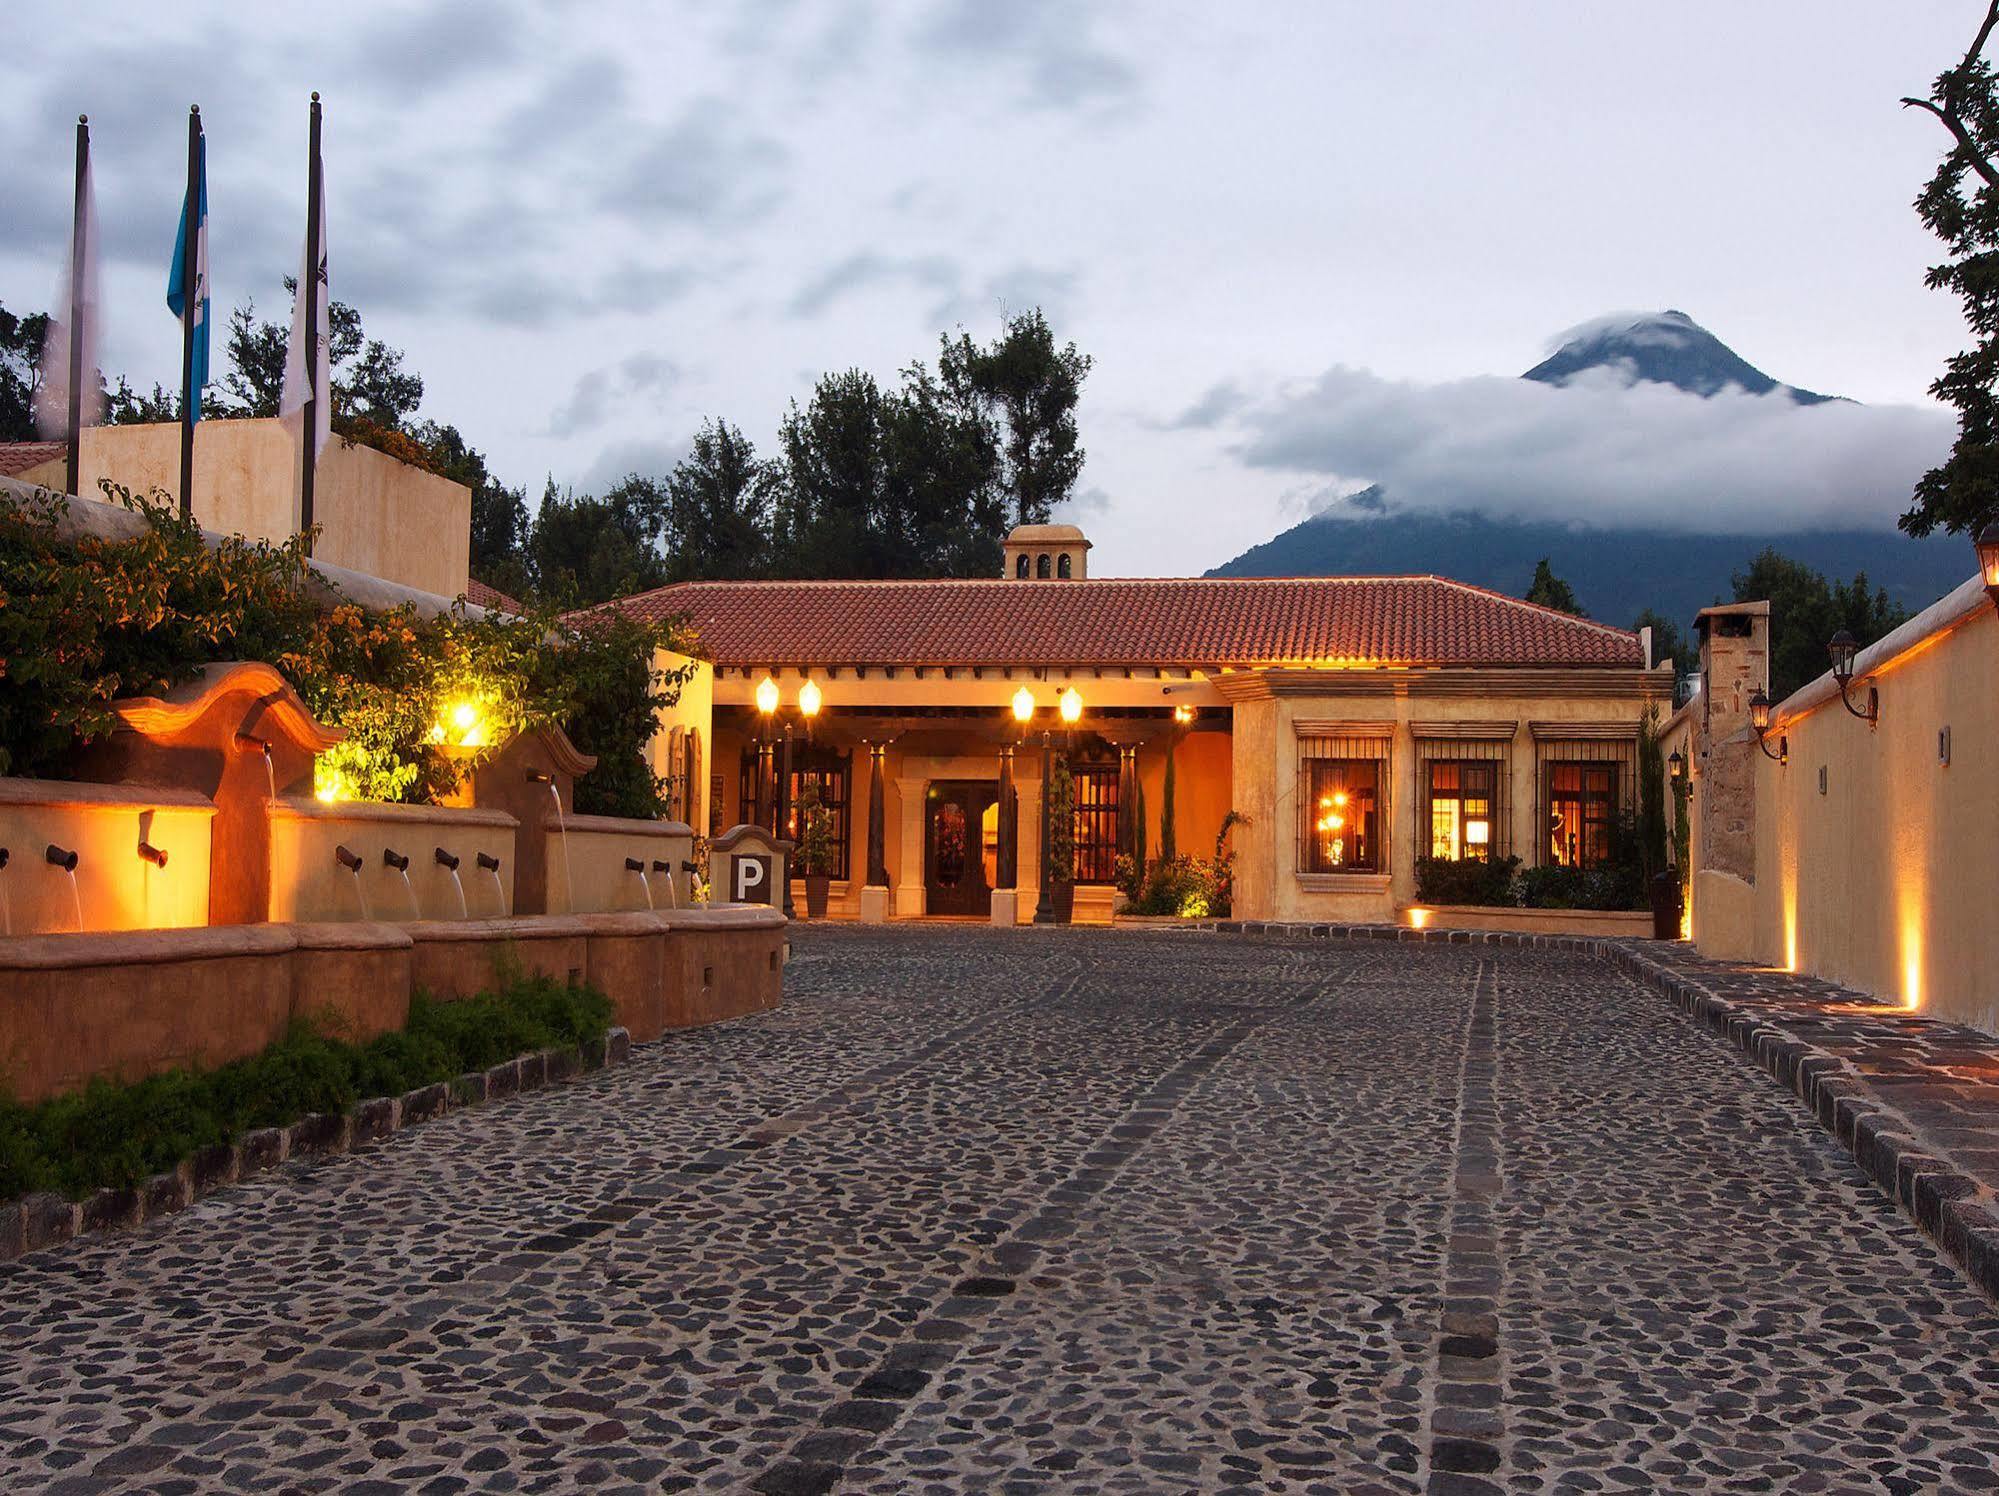 Hotel Camino Real Antigua Exterior foto